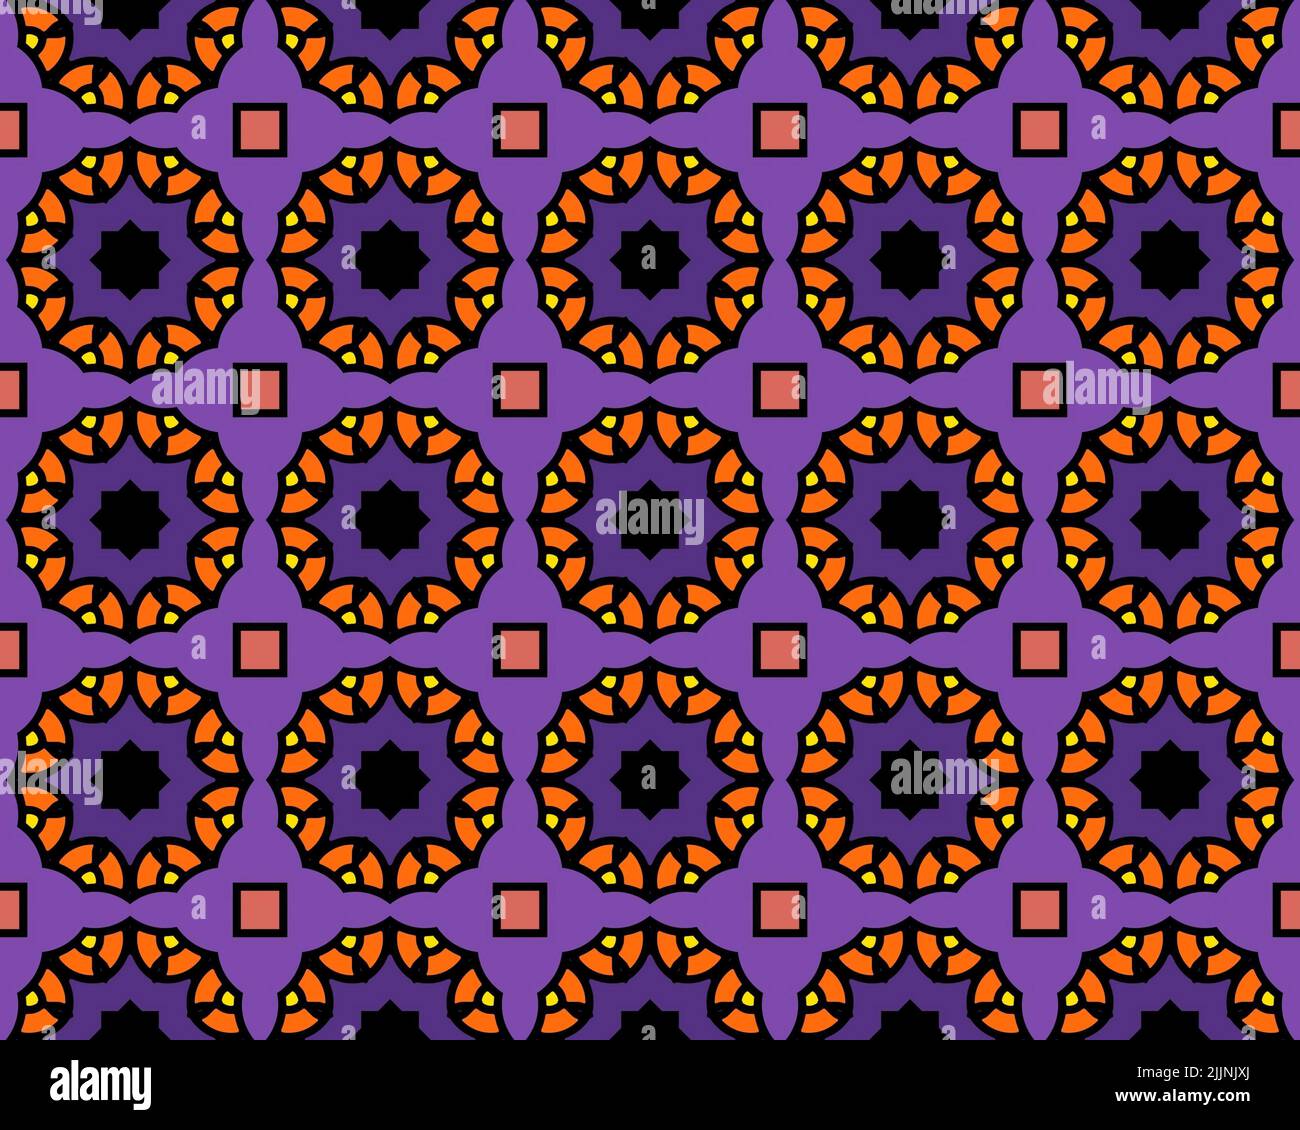 An illustration of a purple seamless tile pattern. Stock Photo